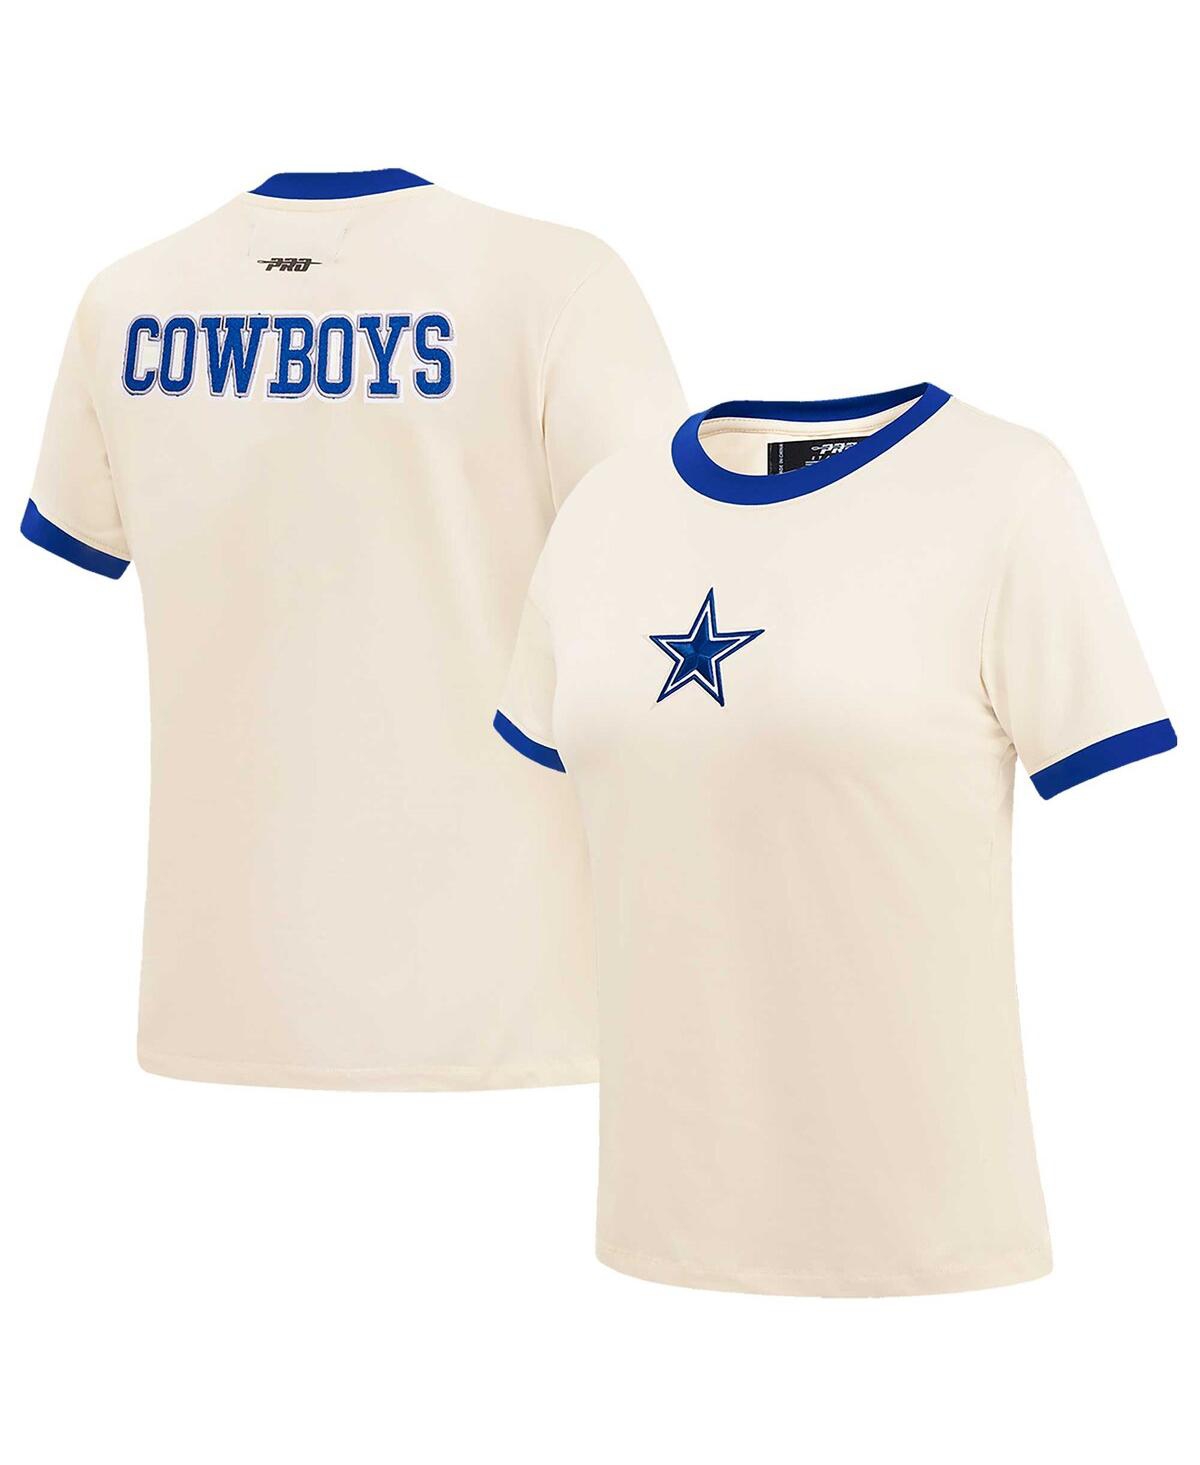 Shop Pro Standard Women's  Cream Distressed Dallas Cowboys Retro Classic Ringer T-shirt